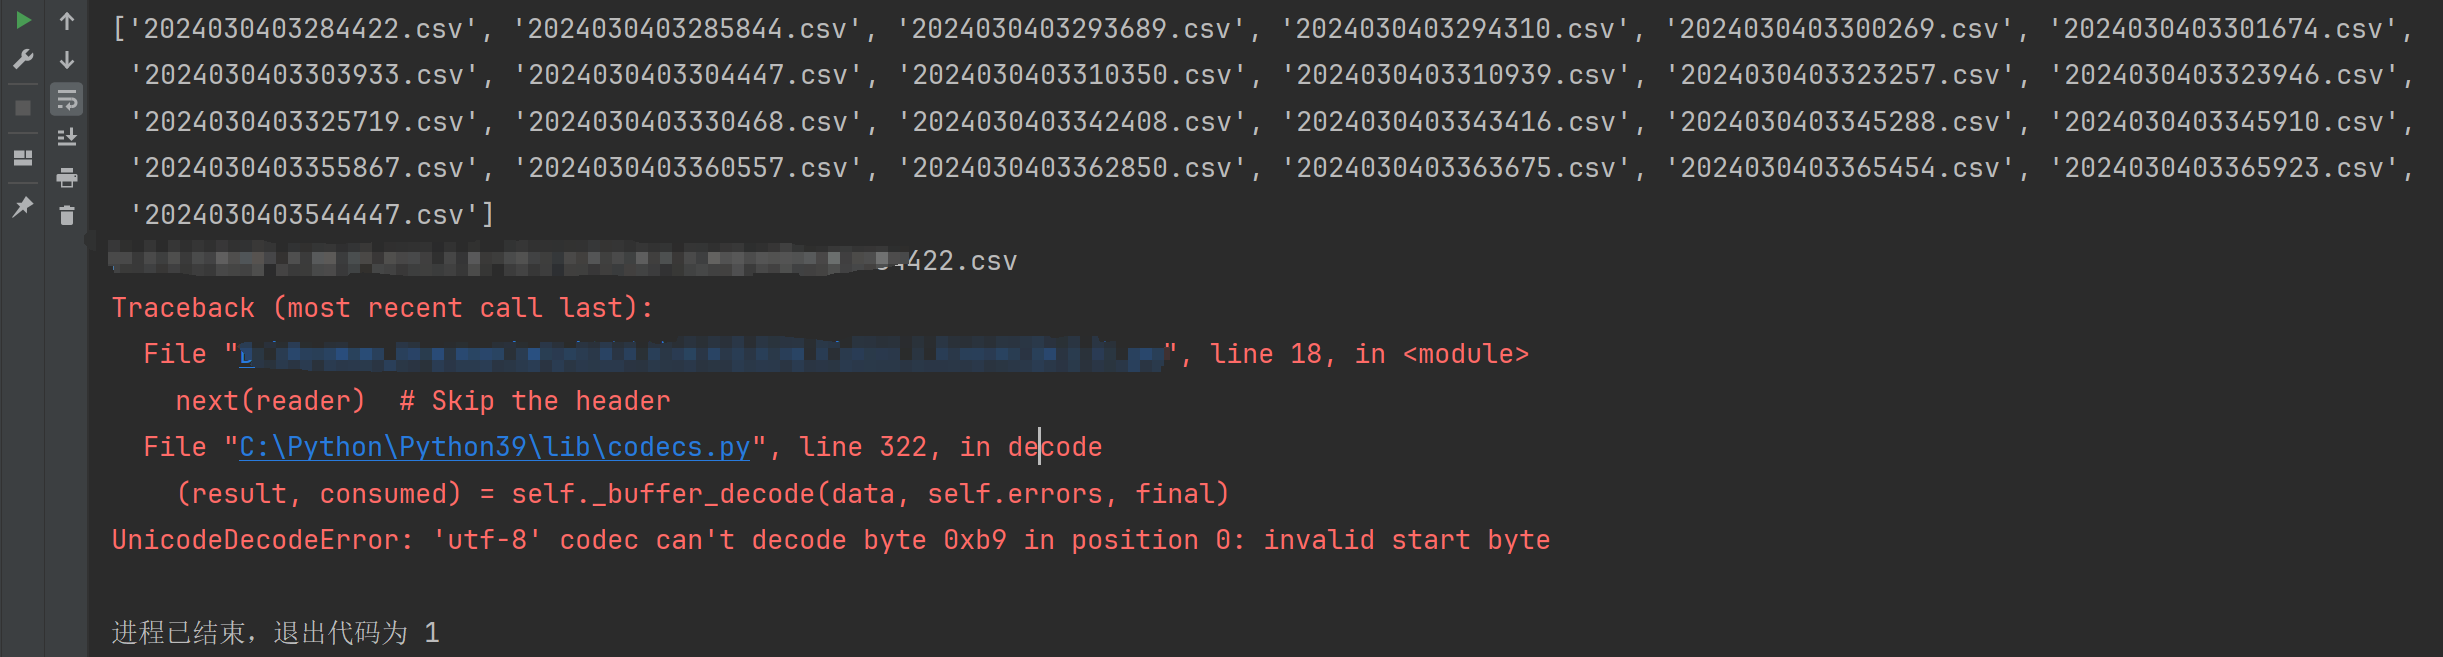 UnicodeDecodeError: ‘utf-8’ codec can’t decode byte 0xb9 in position 0: invalid start byte错误解决